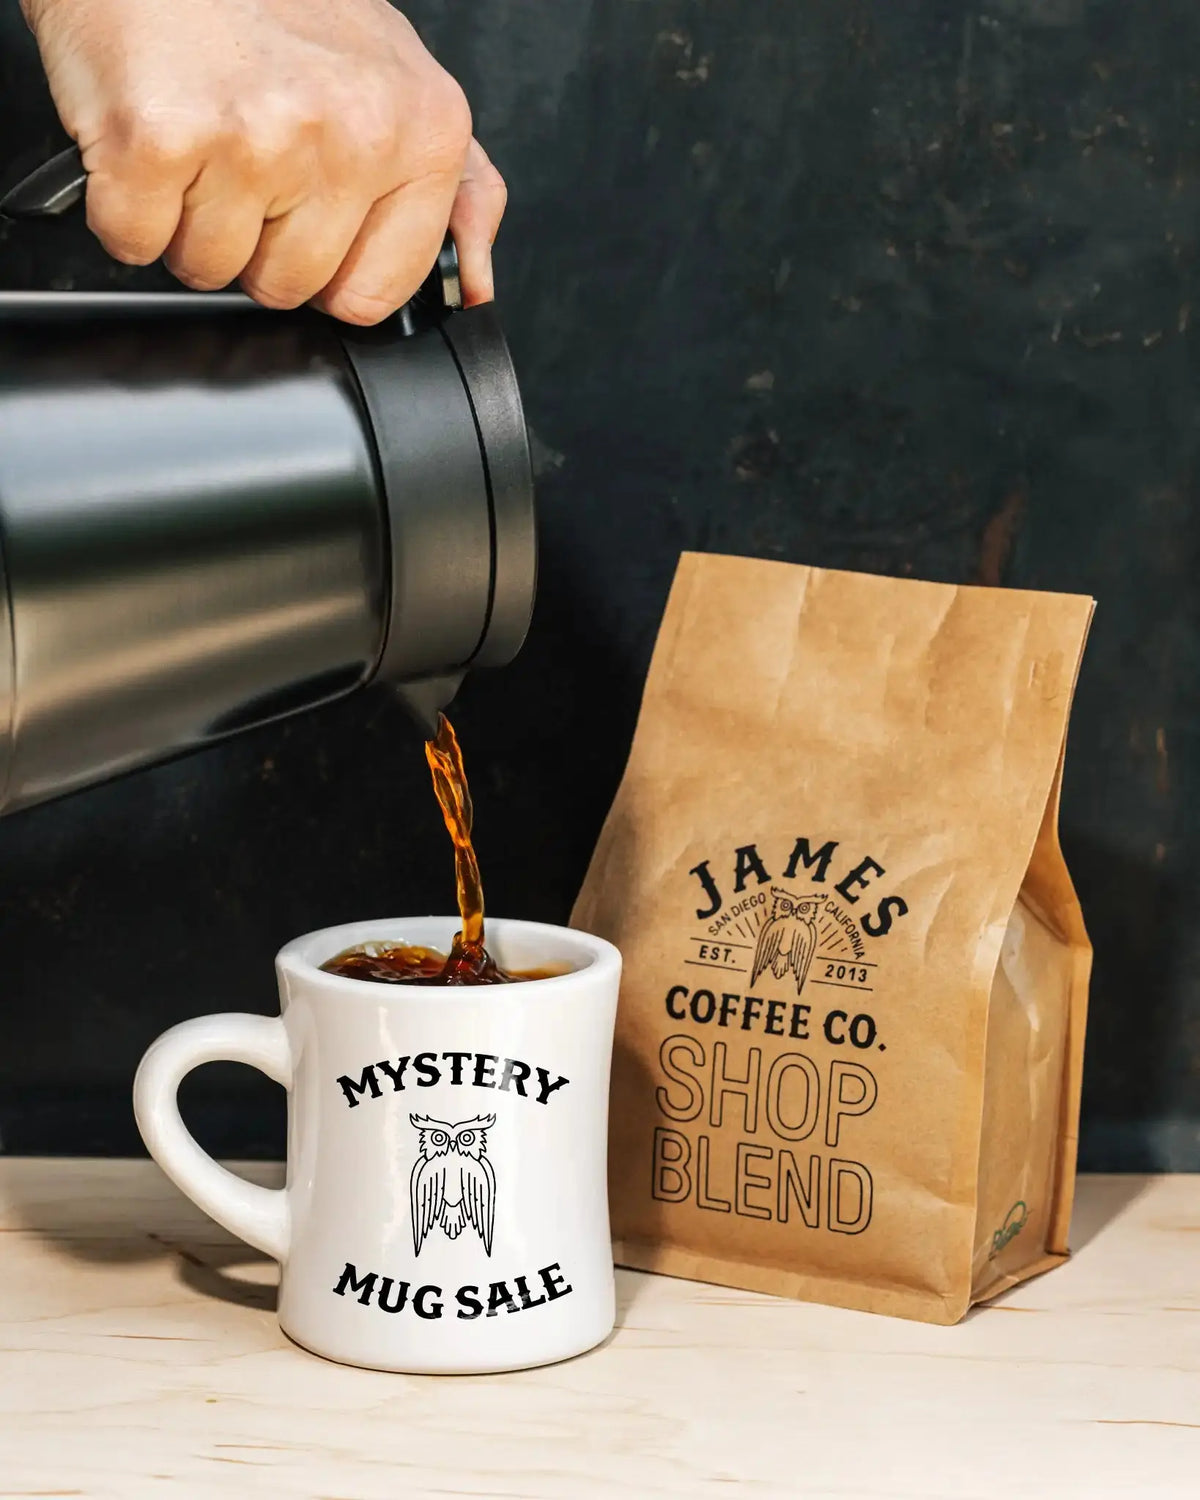 Free Mystery Mug - Gift James Coffee Co